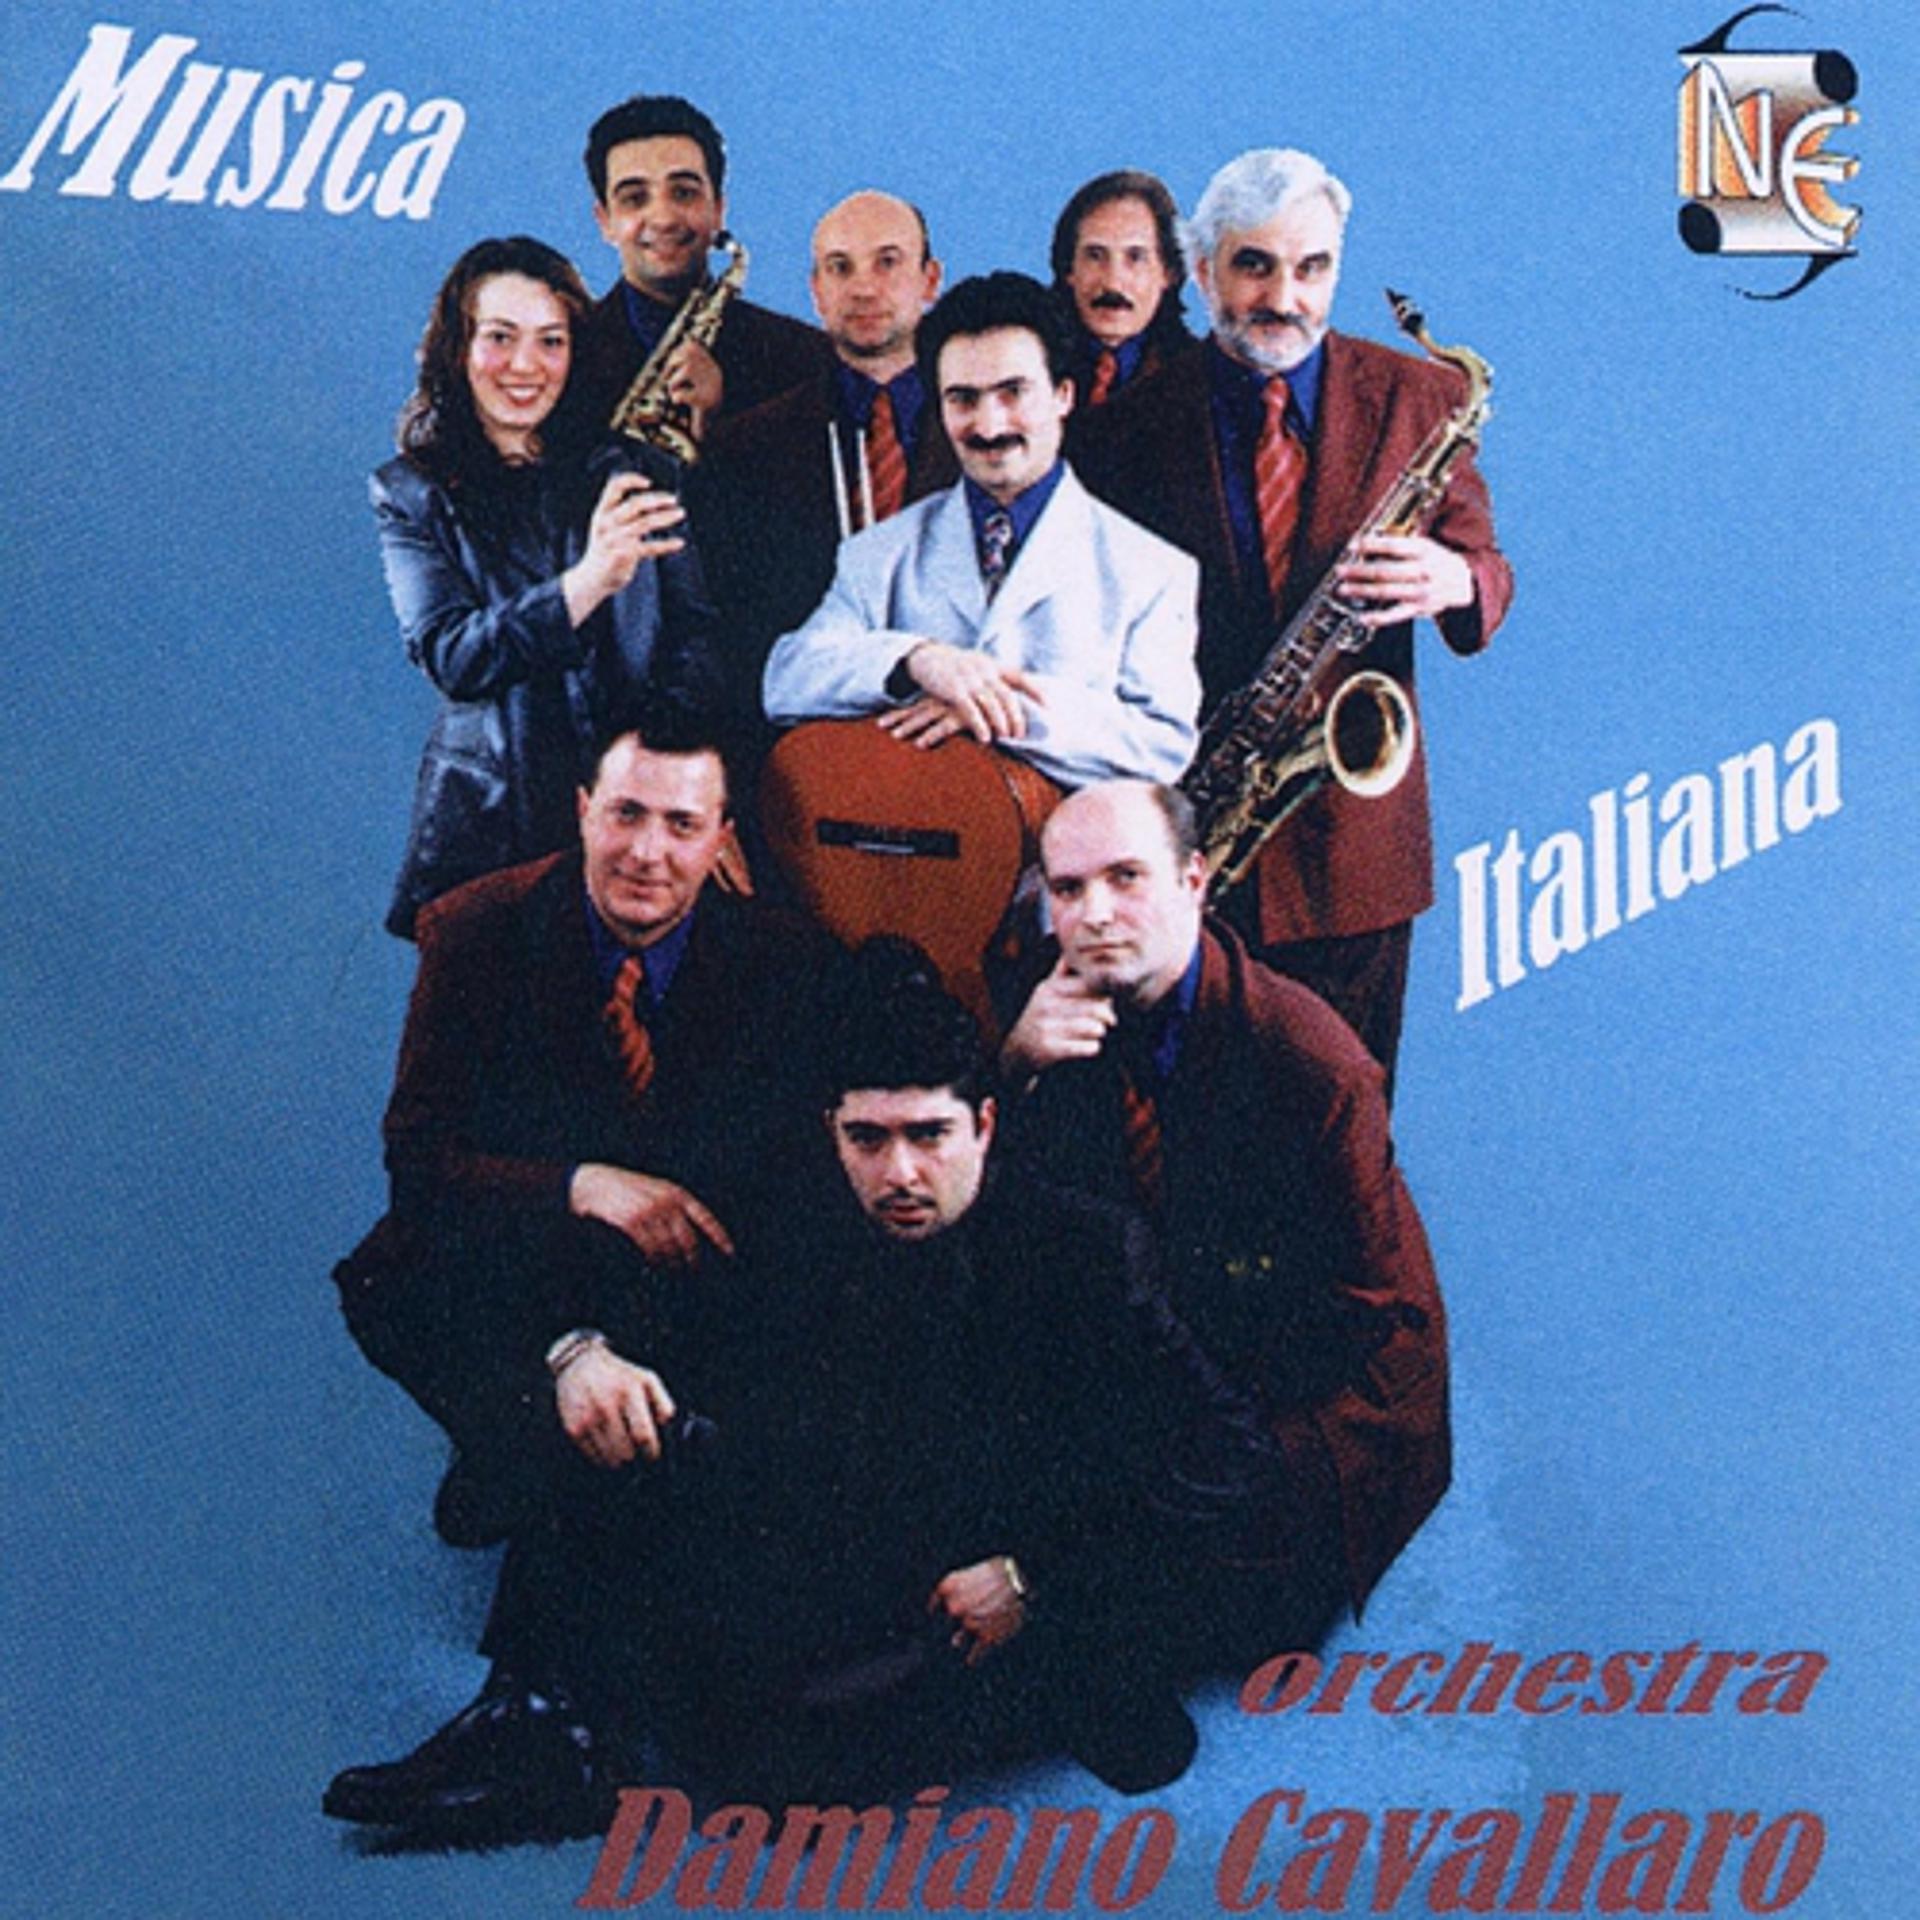 Постер альбома Musica Italiana